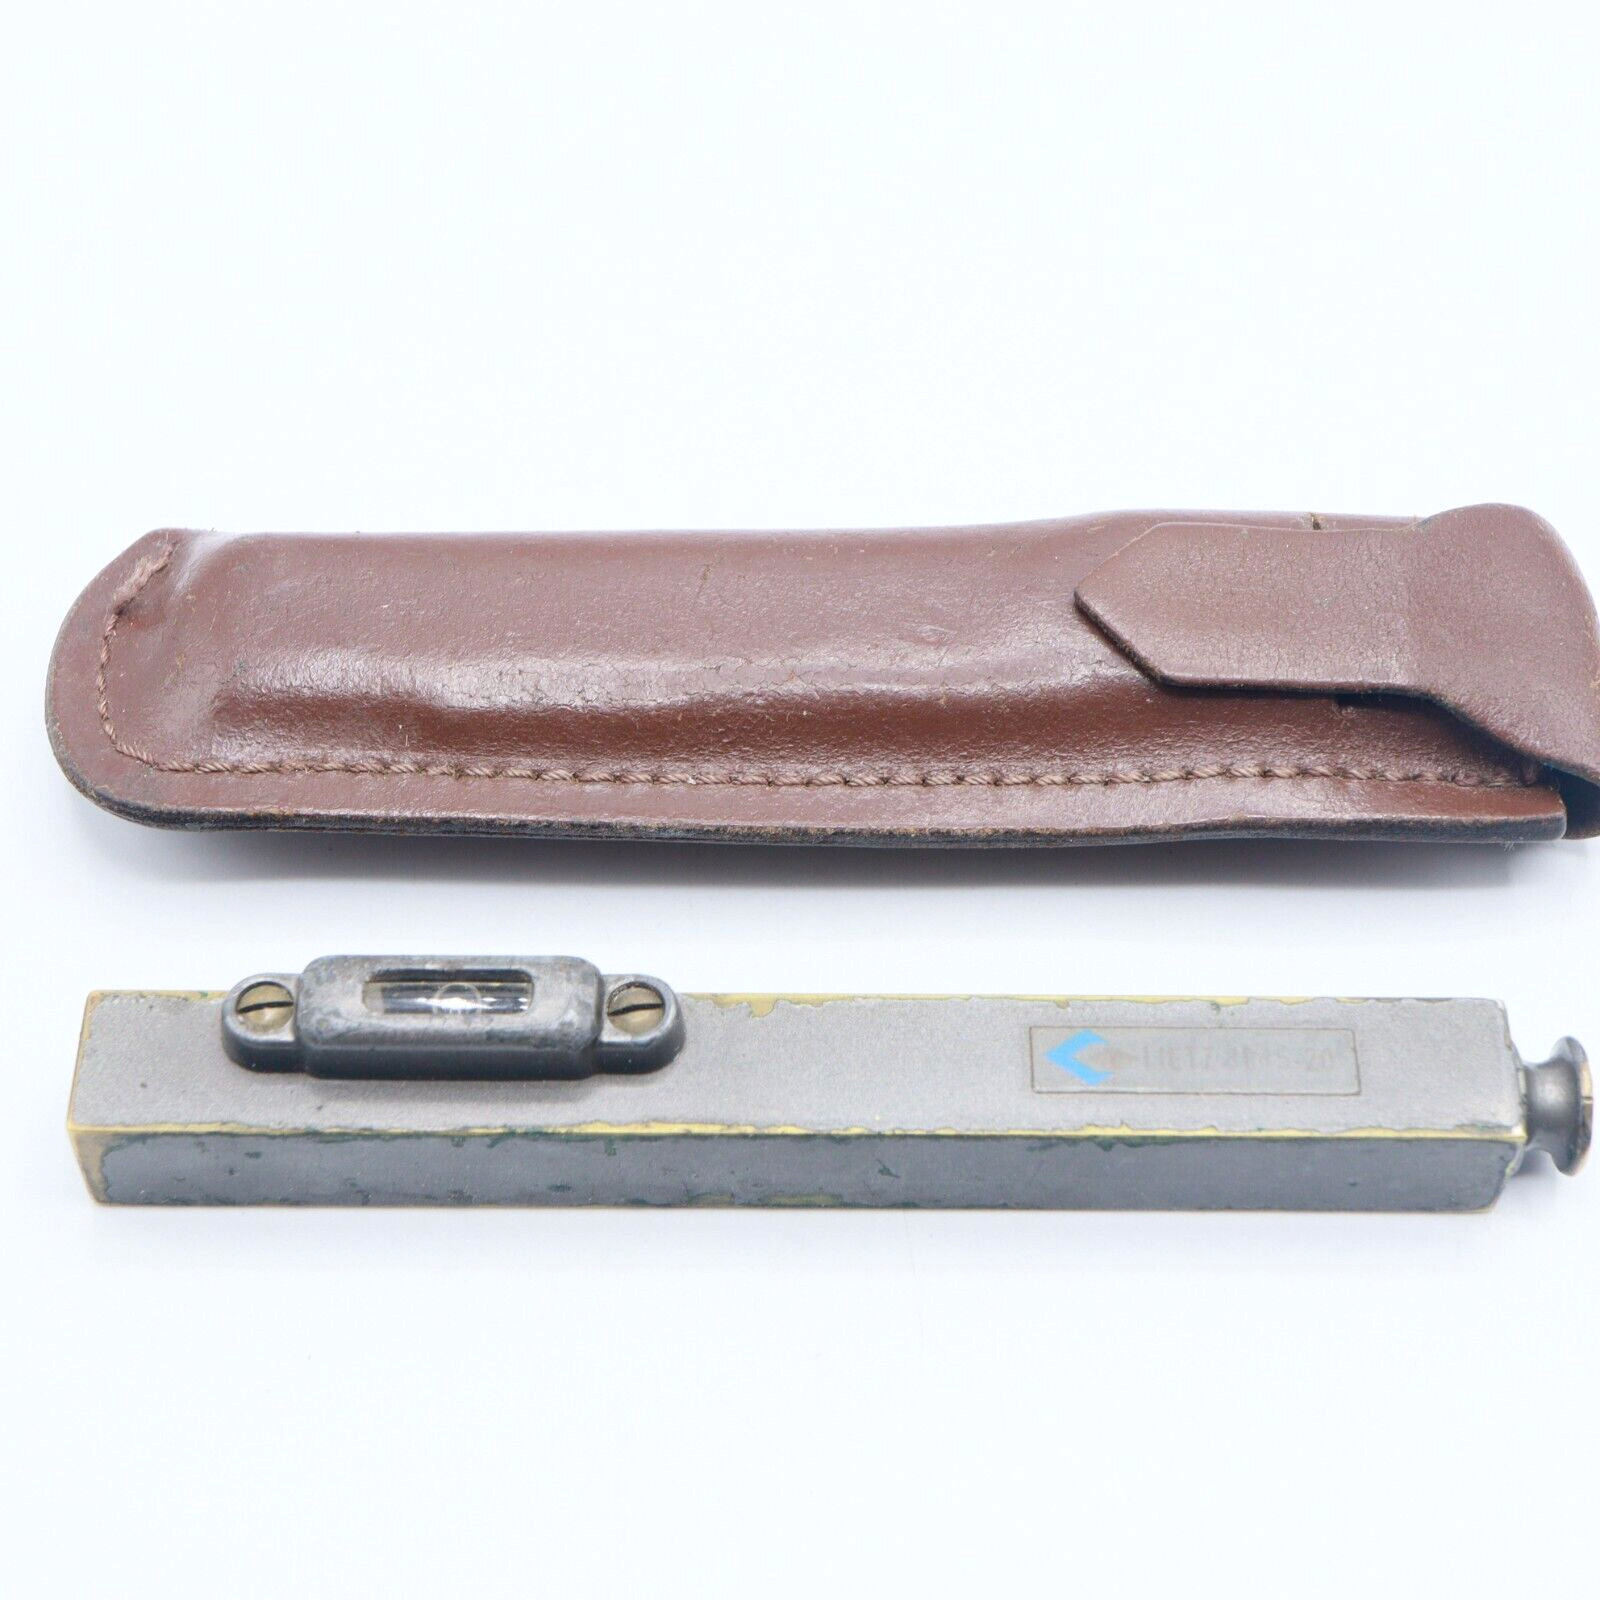 Vintage Lietz Hand Surveyor's Scope Level with Leather Case